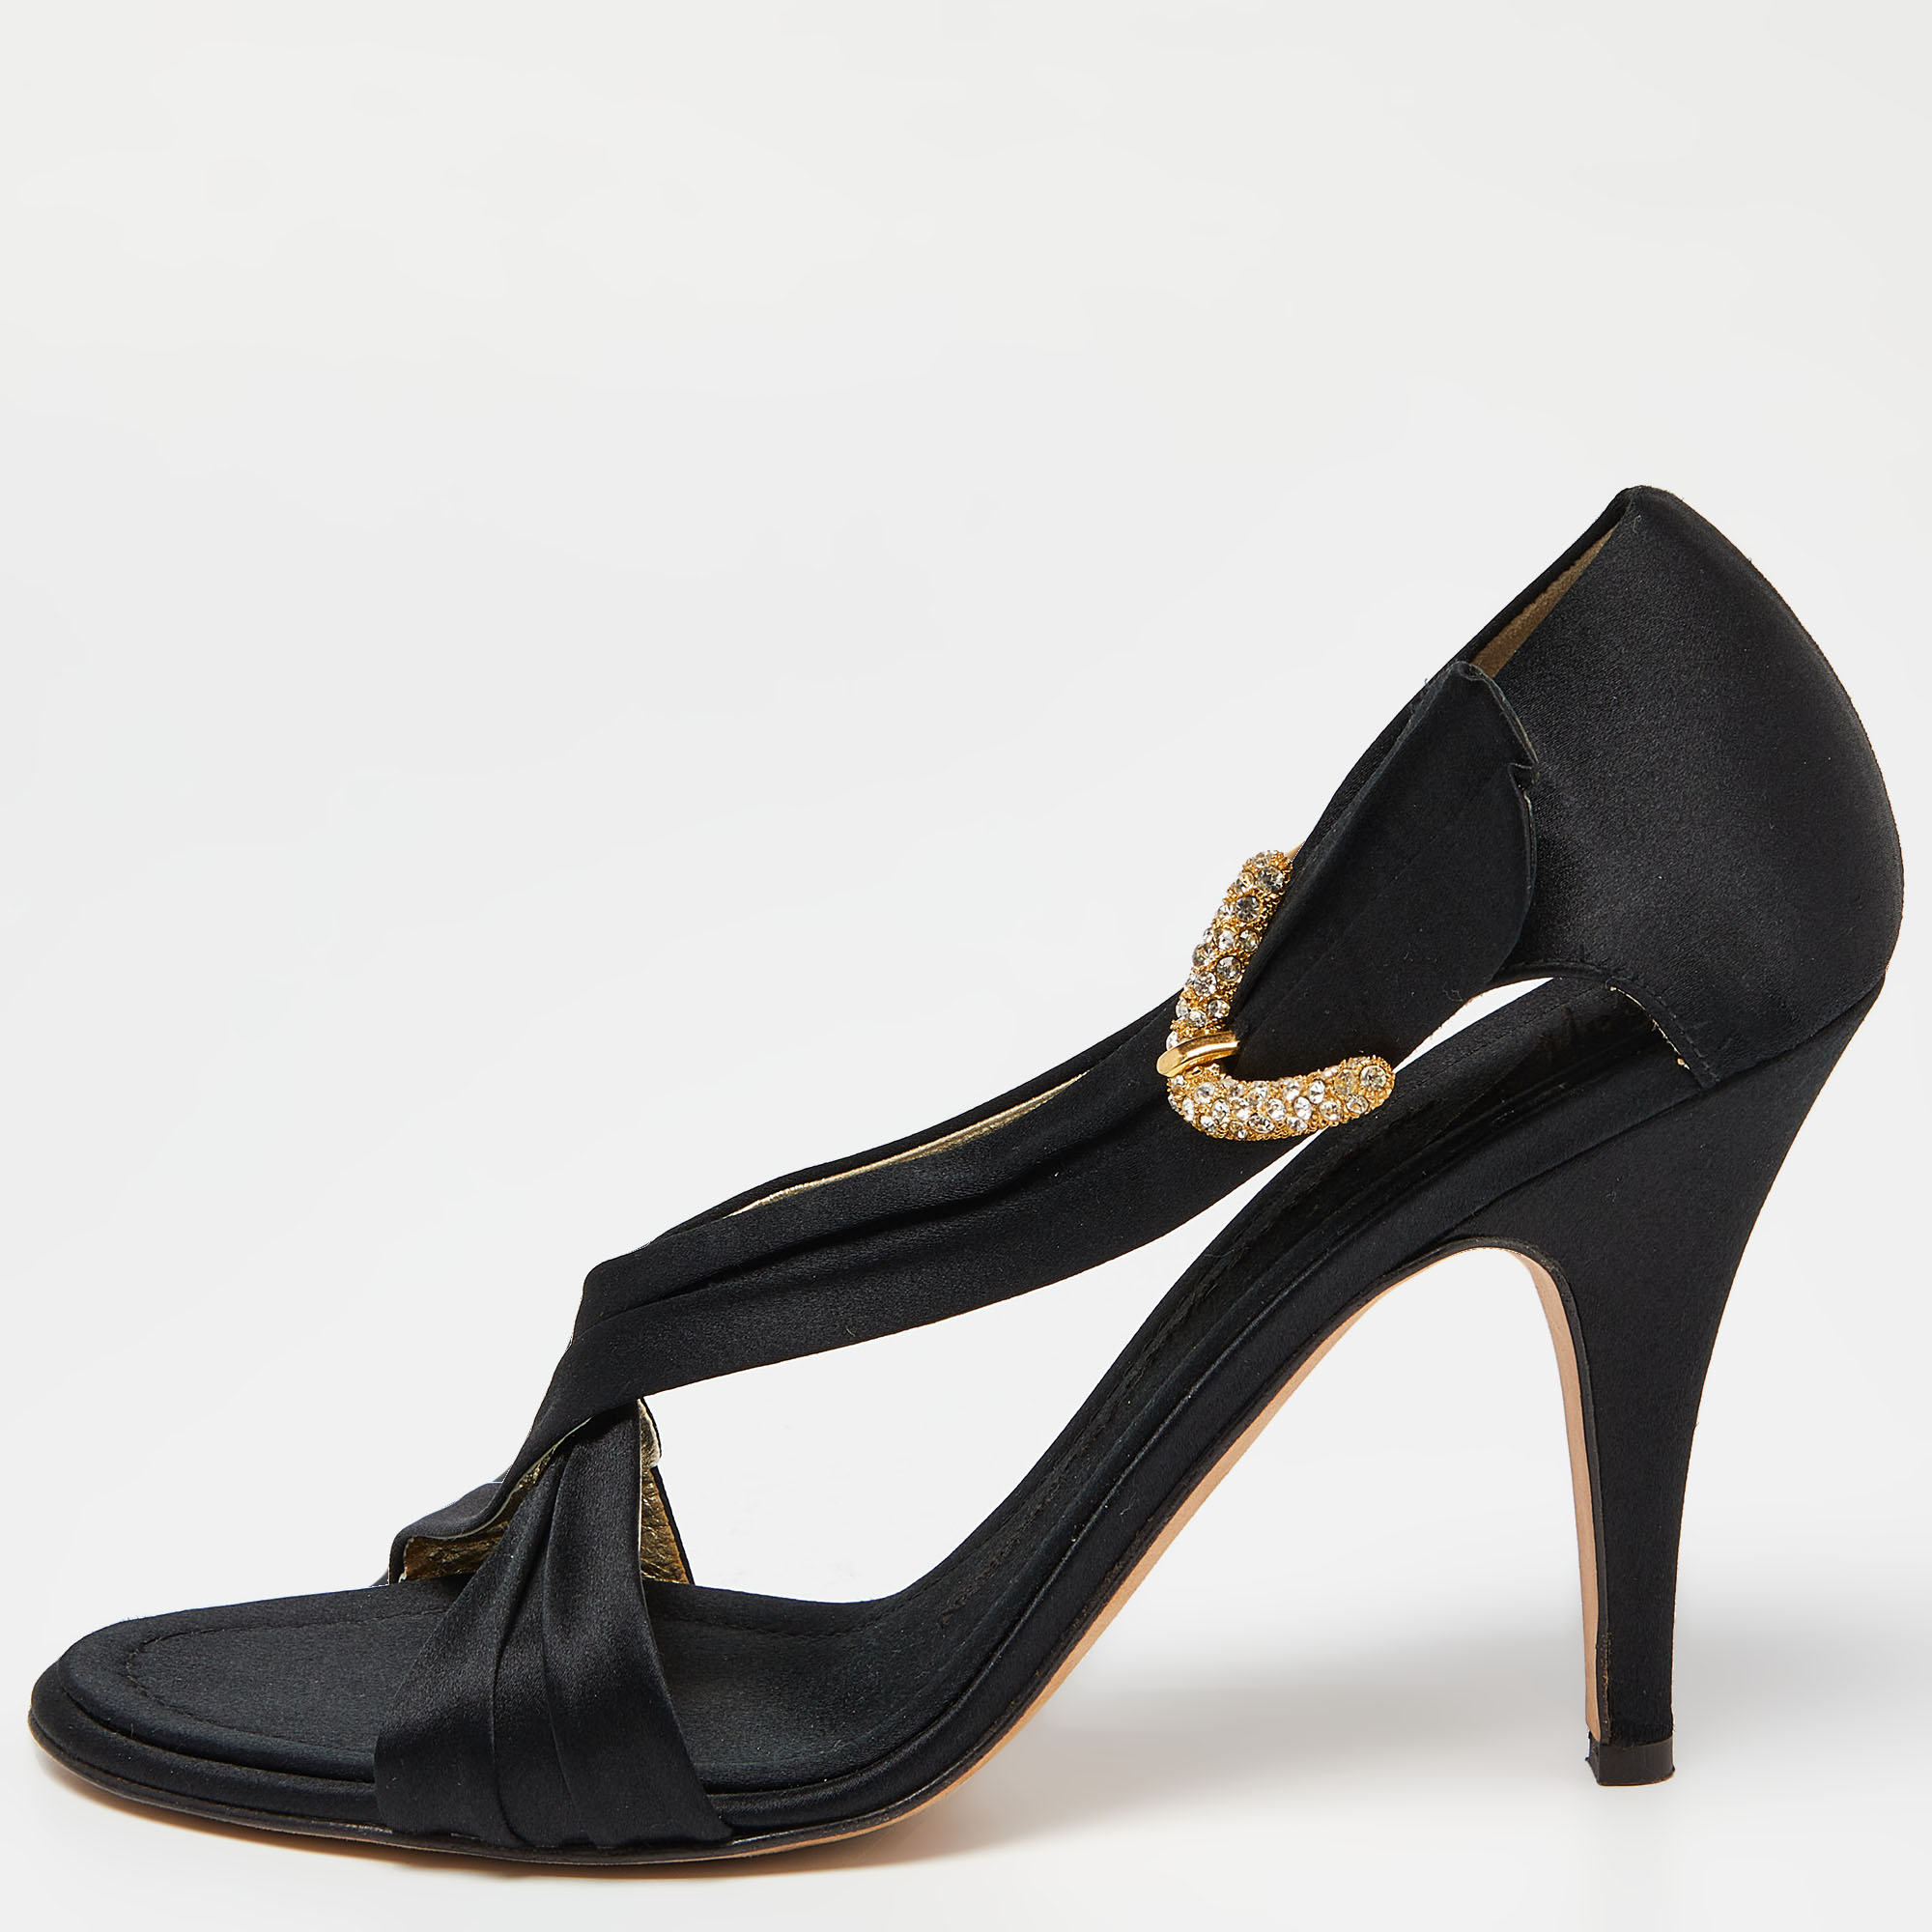 Pre-owned Giuseppe Zanotti Black Satin Crystal Embellished Sandals Size 38